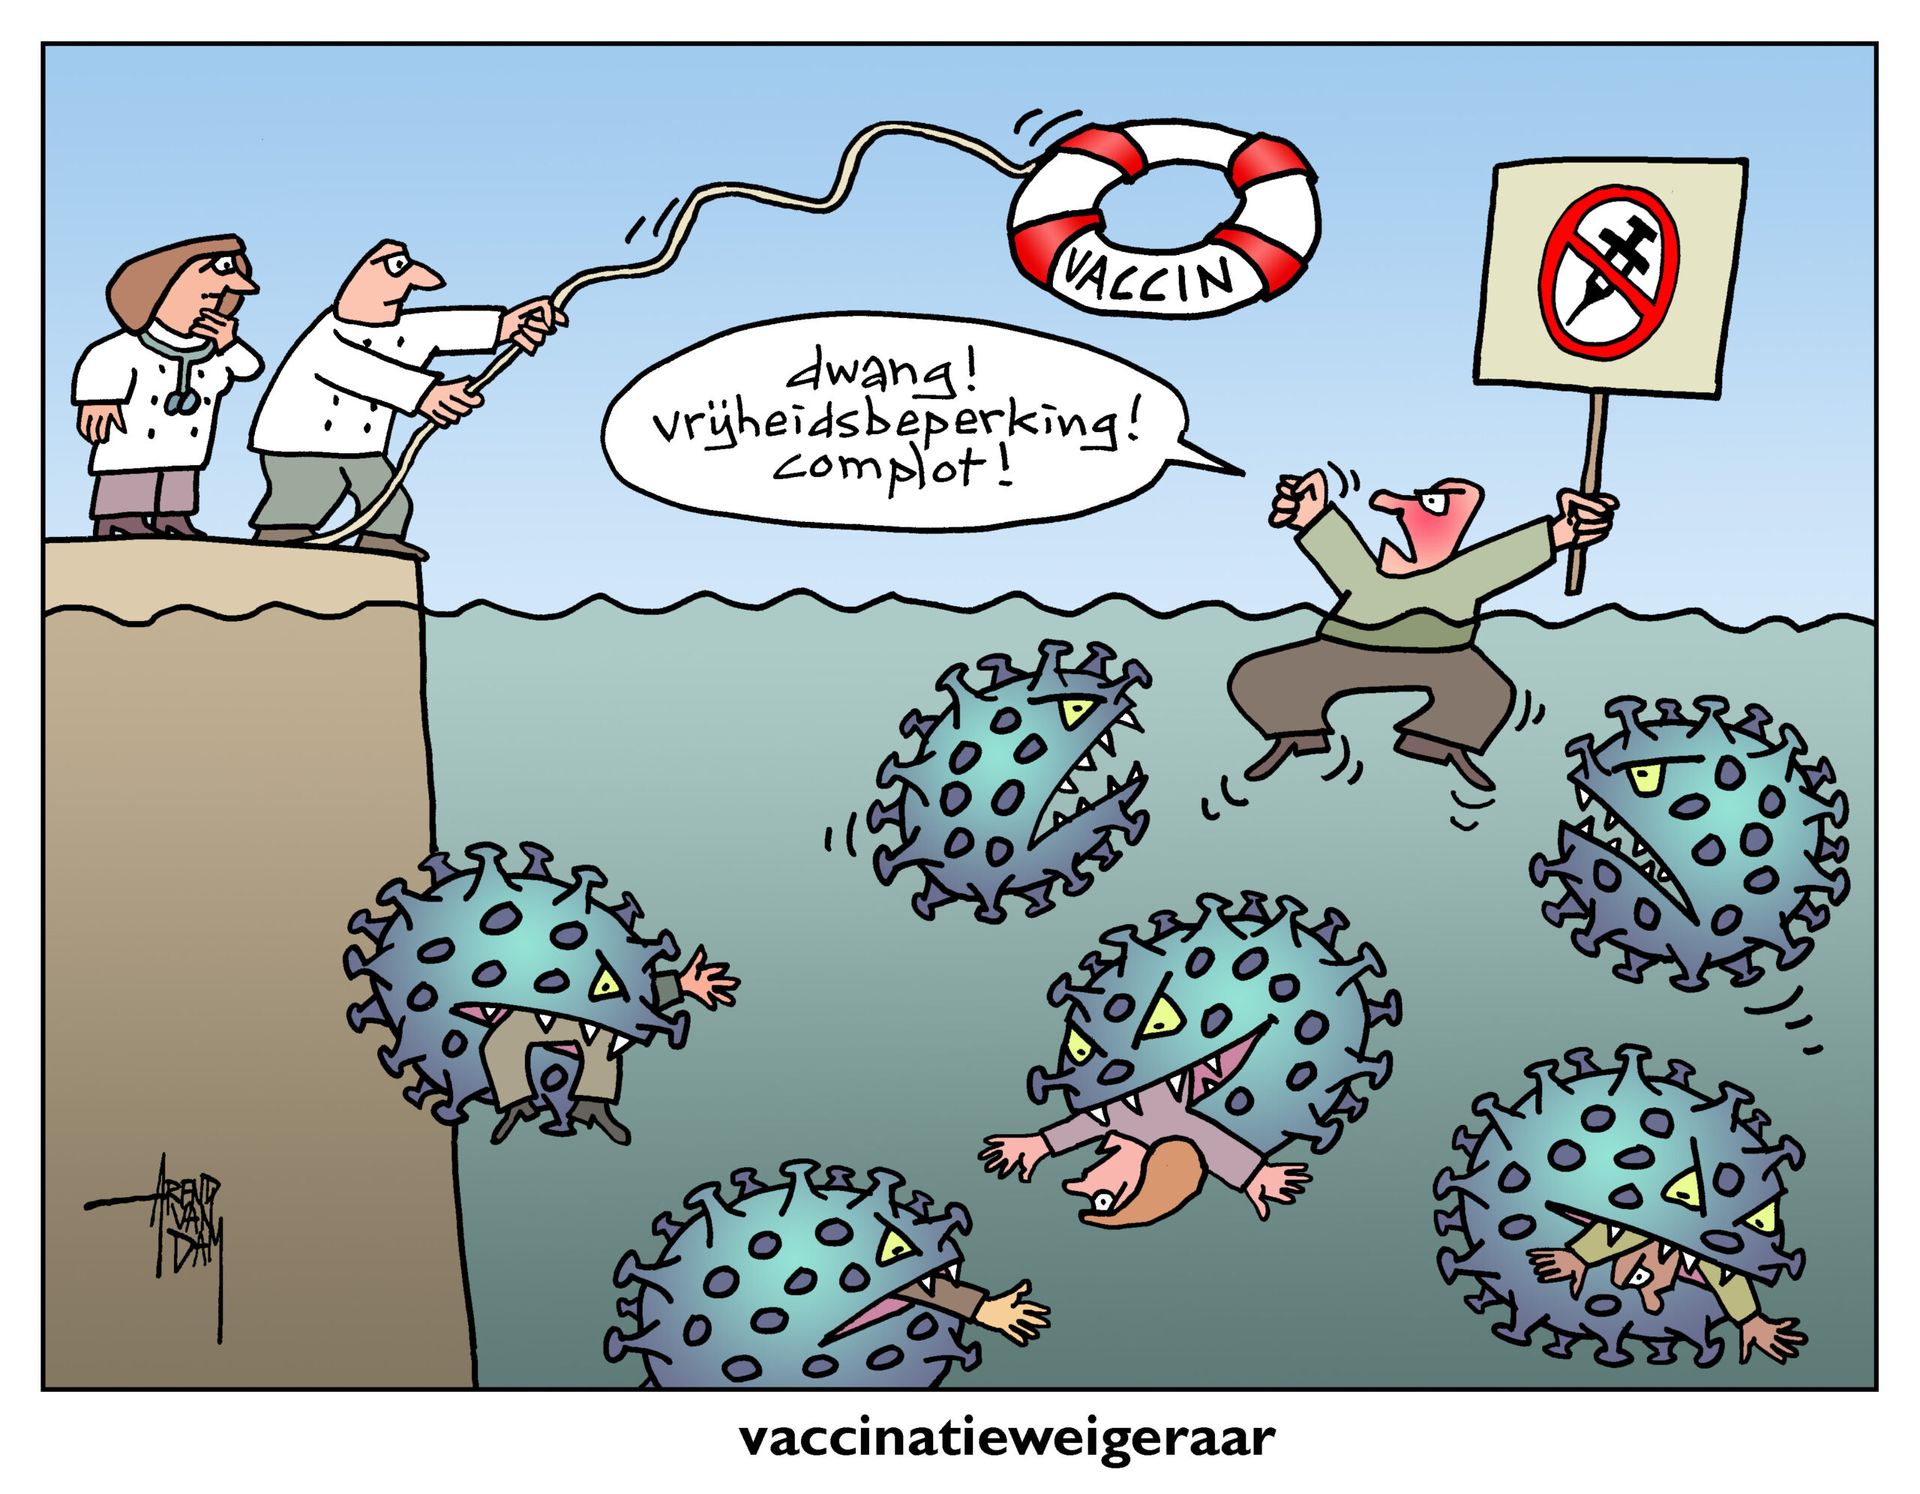 VaccinReddingsboei&CoronaDrenkeling